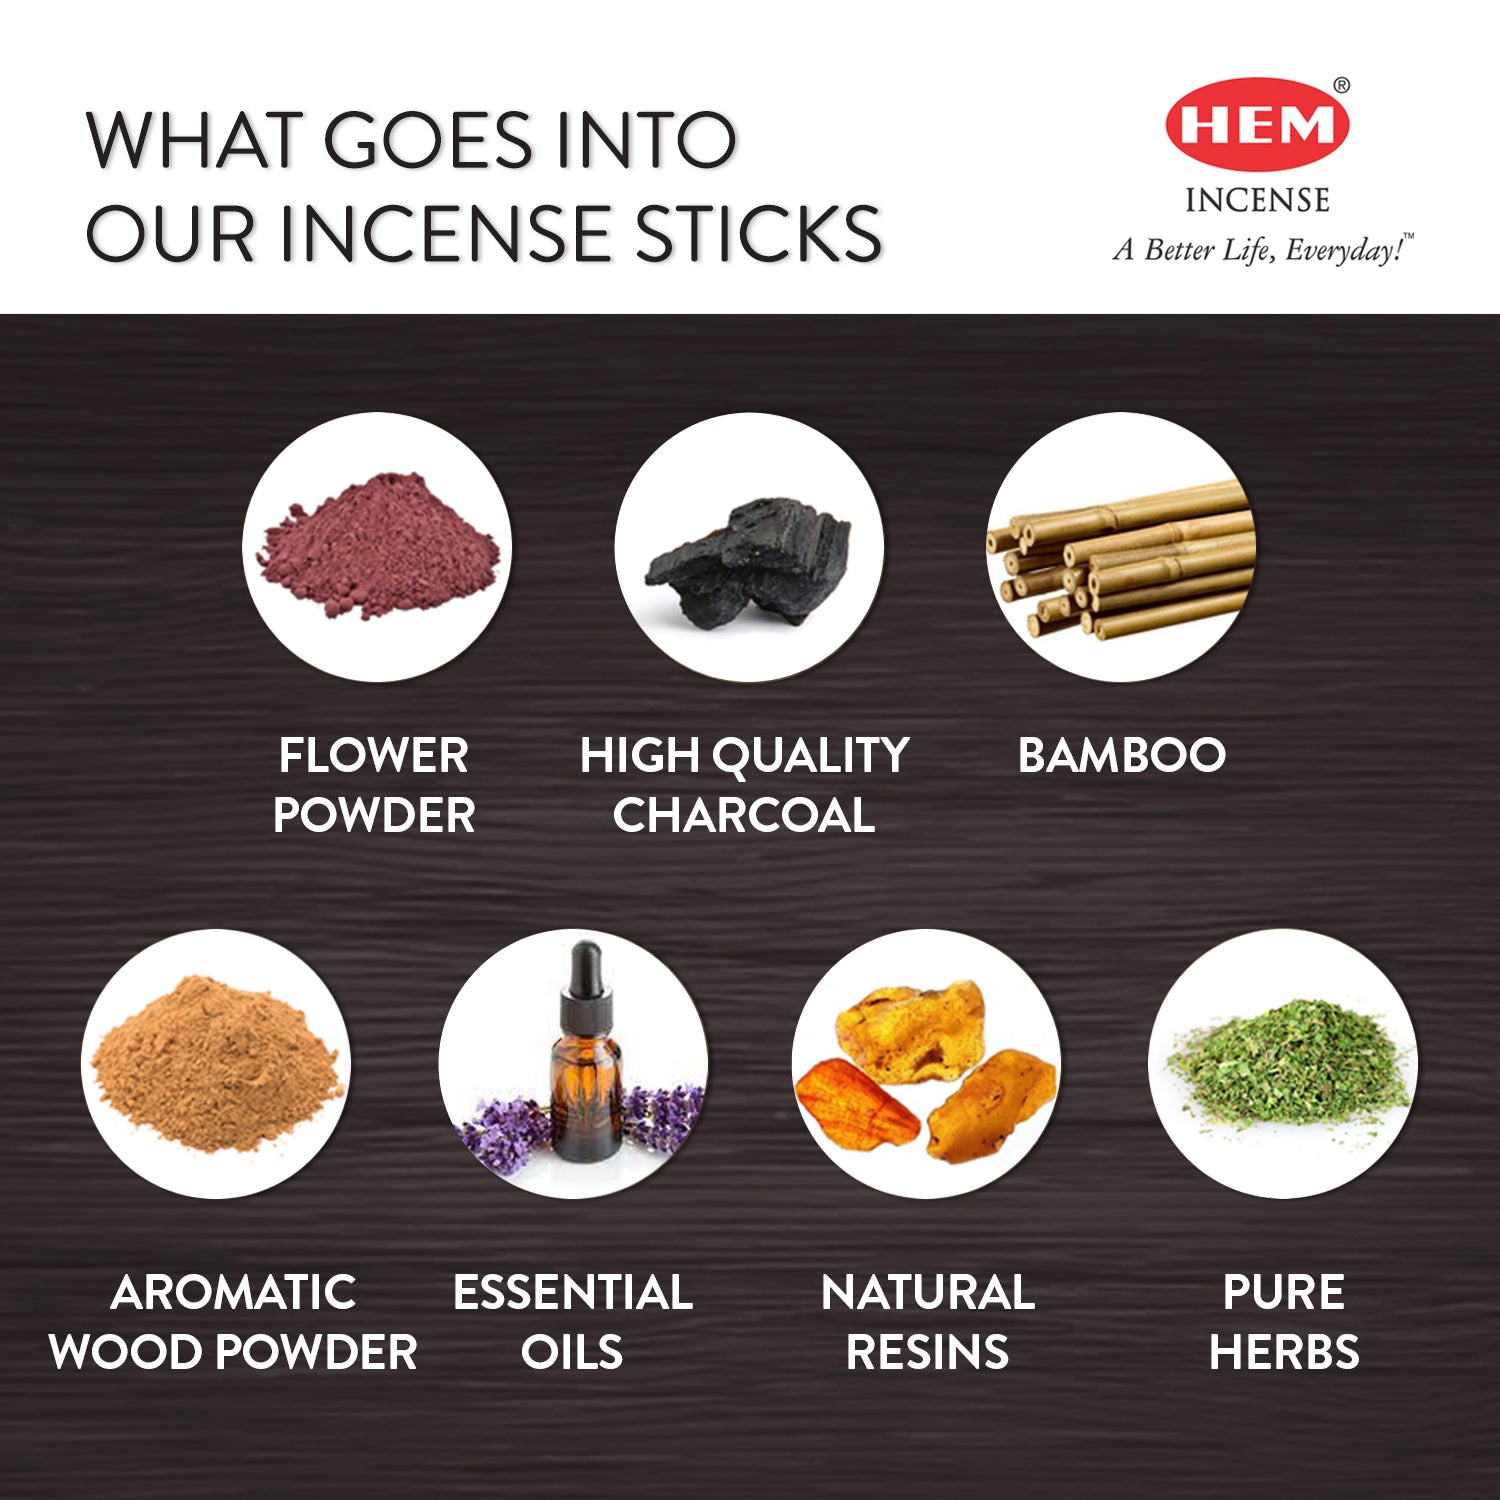 HEM Smudging Indulgence Masala Incense Stick Kit (5 Packets 45g Each)